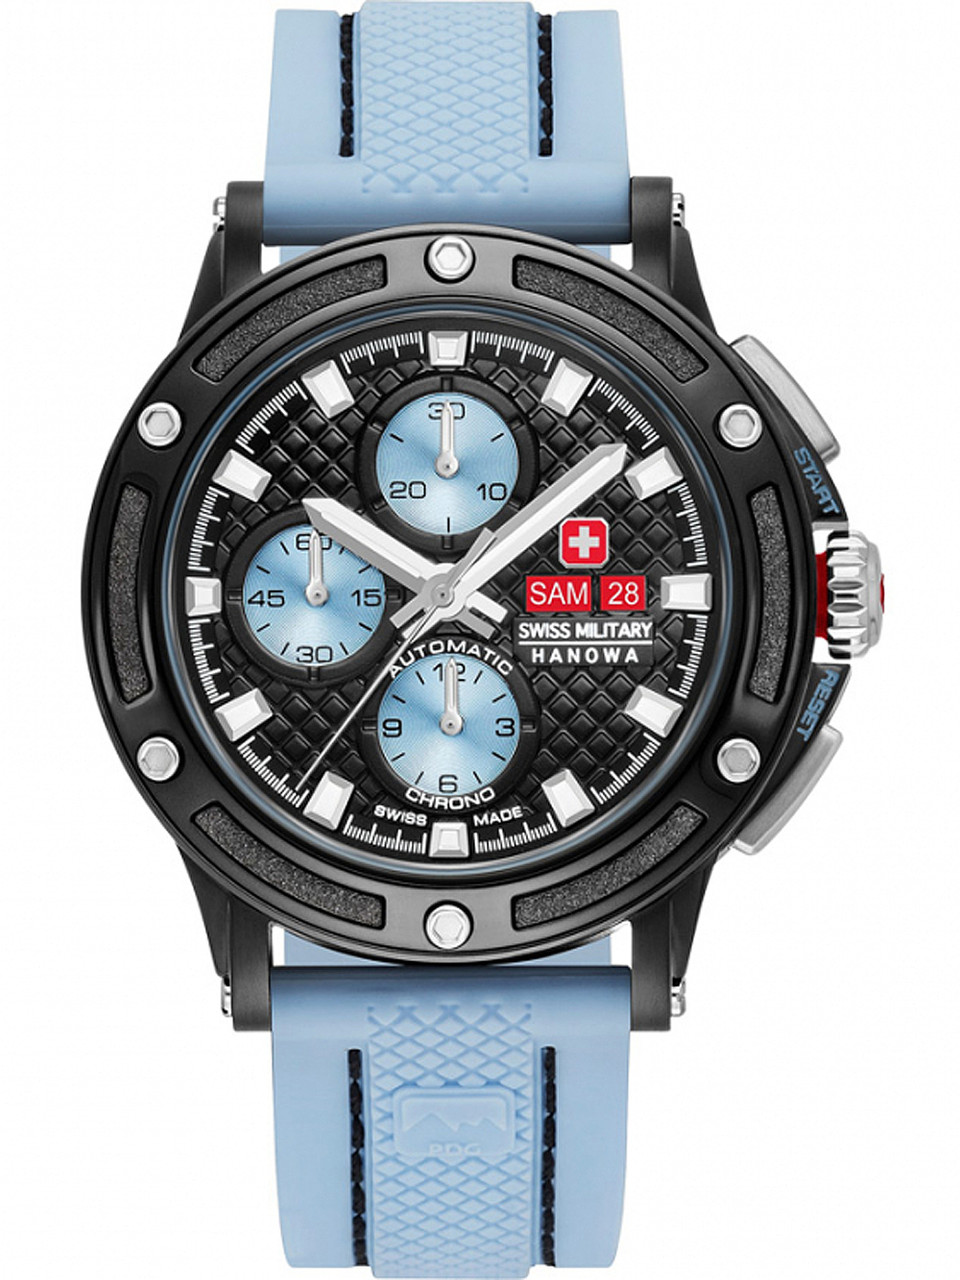 Swiss Military Hanowa 05-4347-13-04-001 PDG chrono automatic 45mm 10ATM -  owlica | Genuine Watches